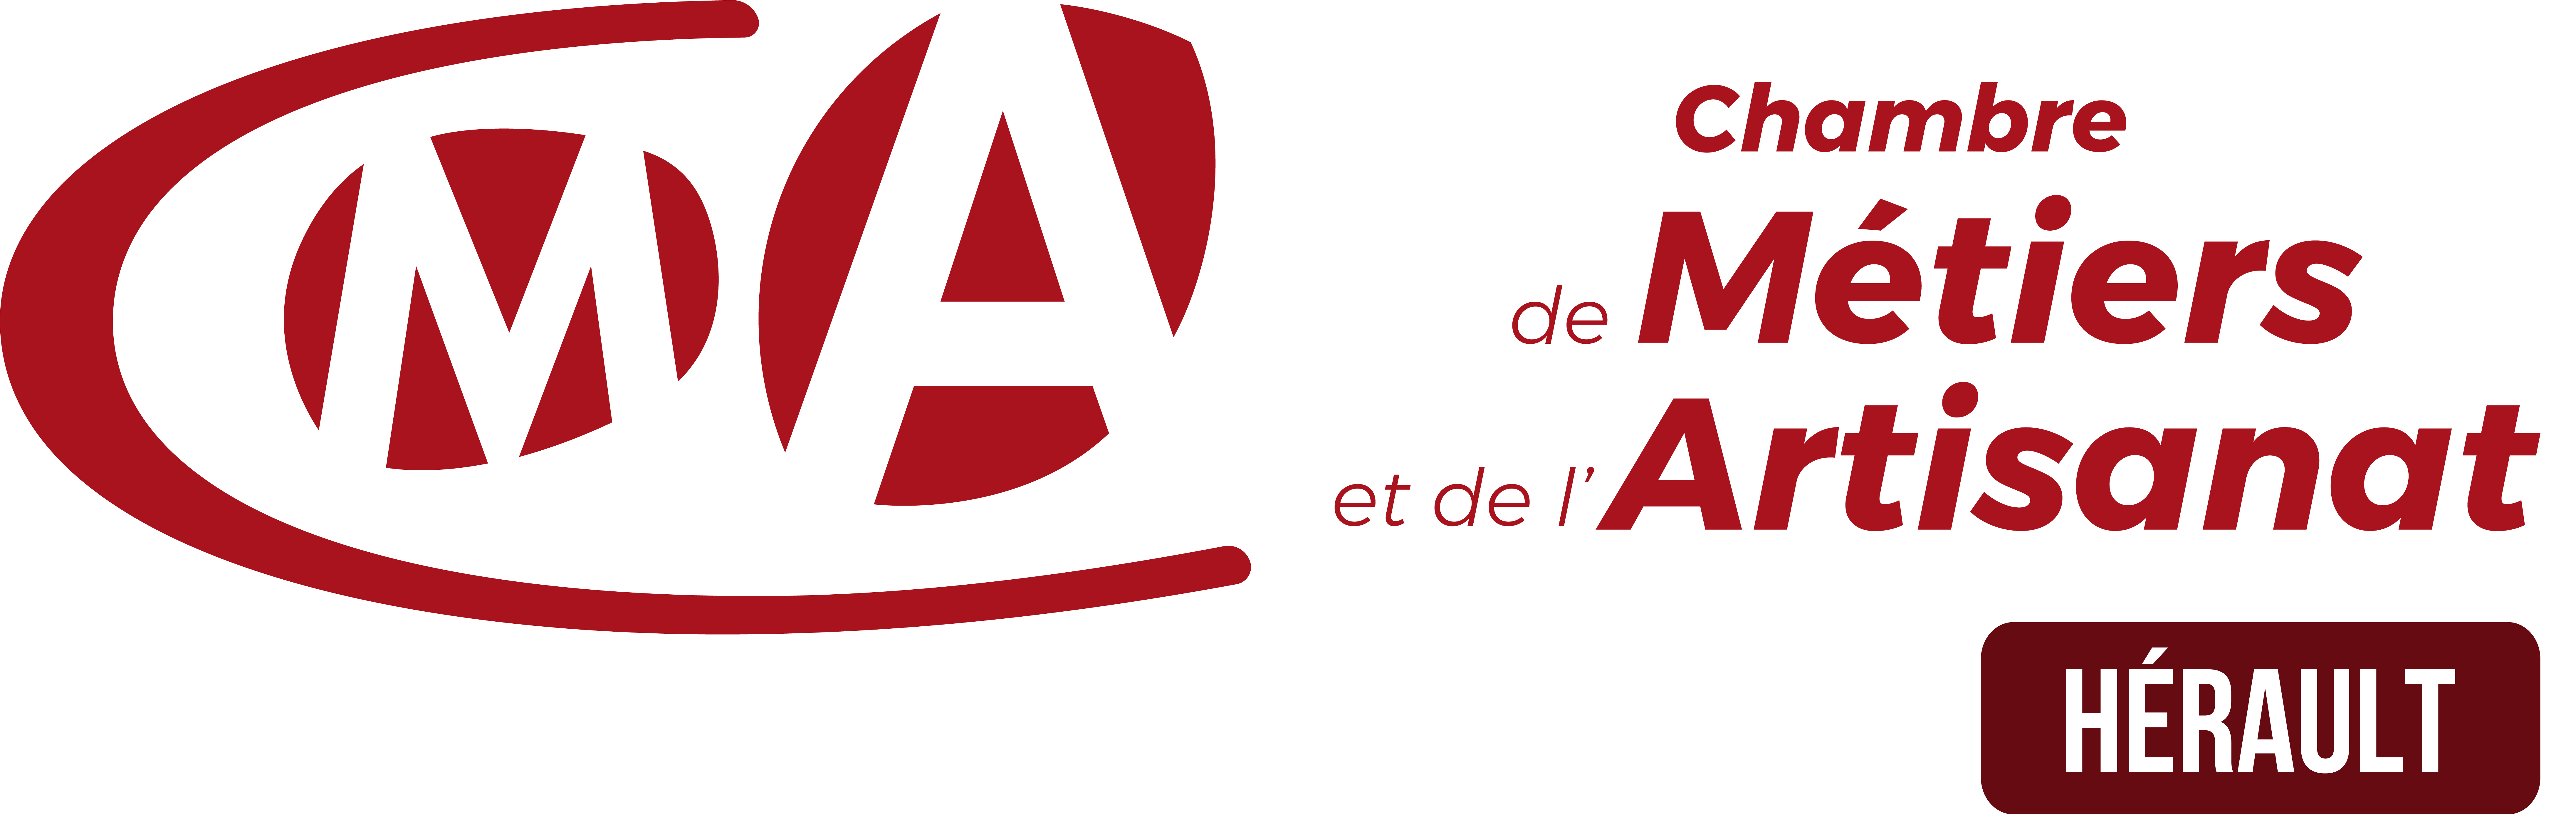 cma-Herault-logo-2018-rouge-local-rectangle.jpg